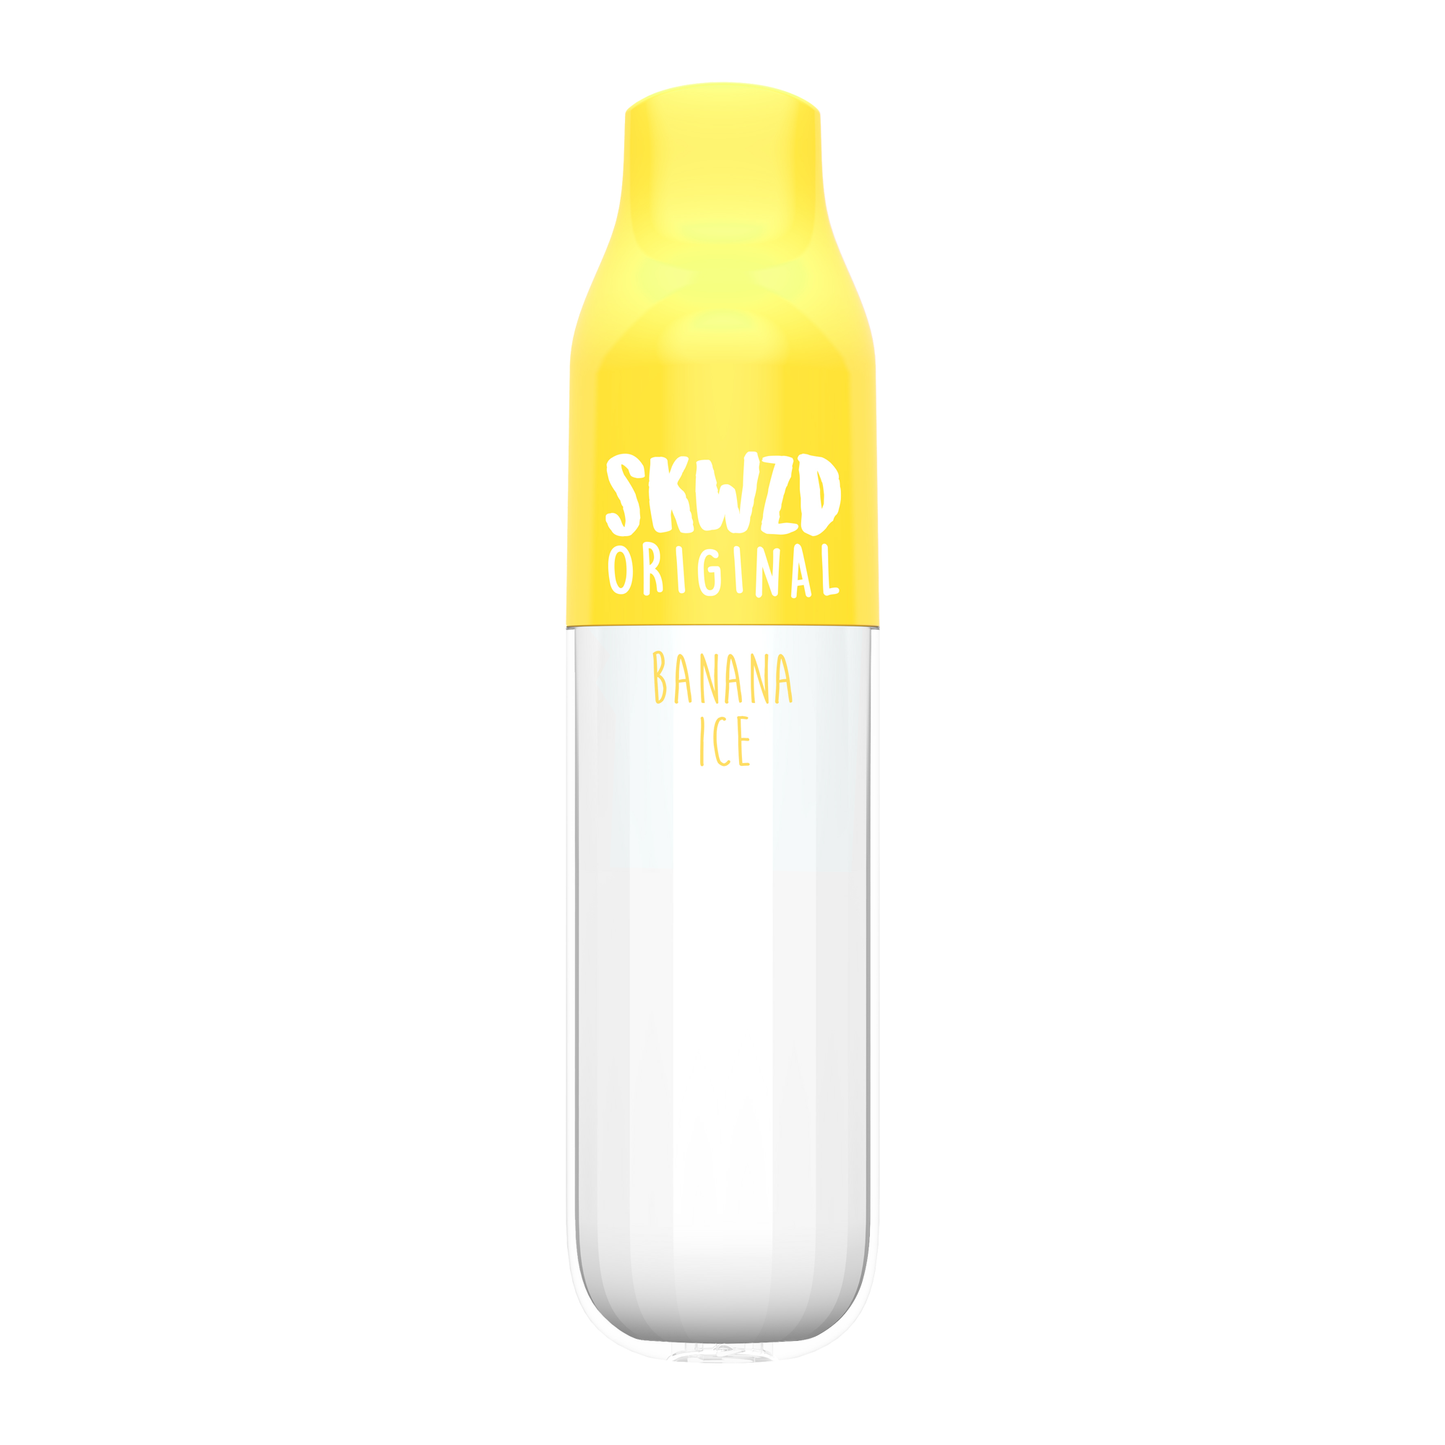 Disposable - SKWZD Original - Banana Ice